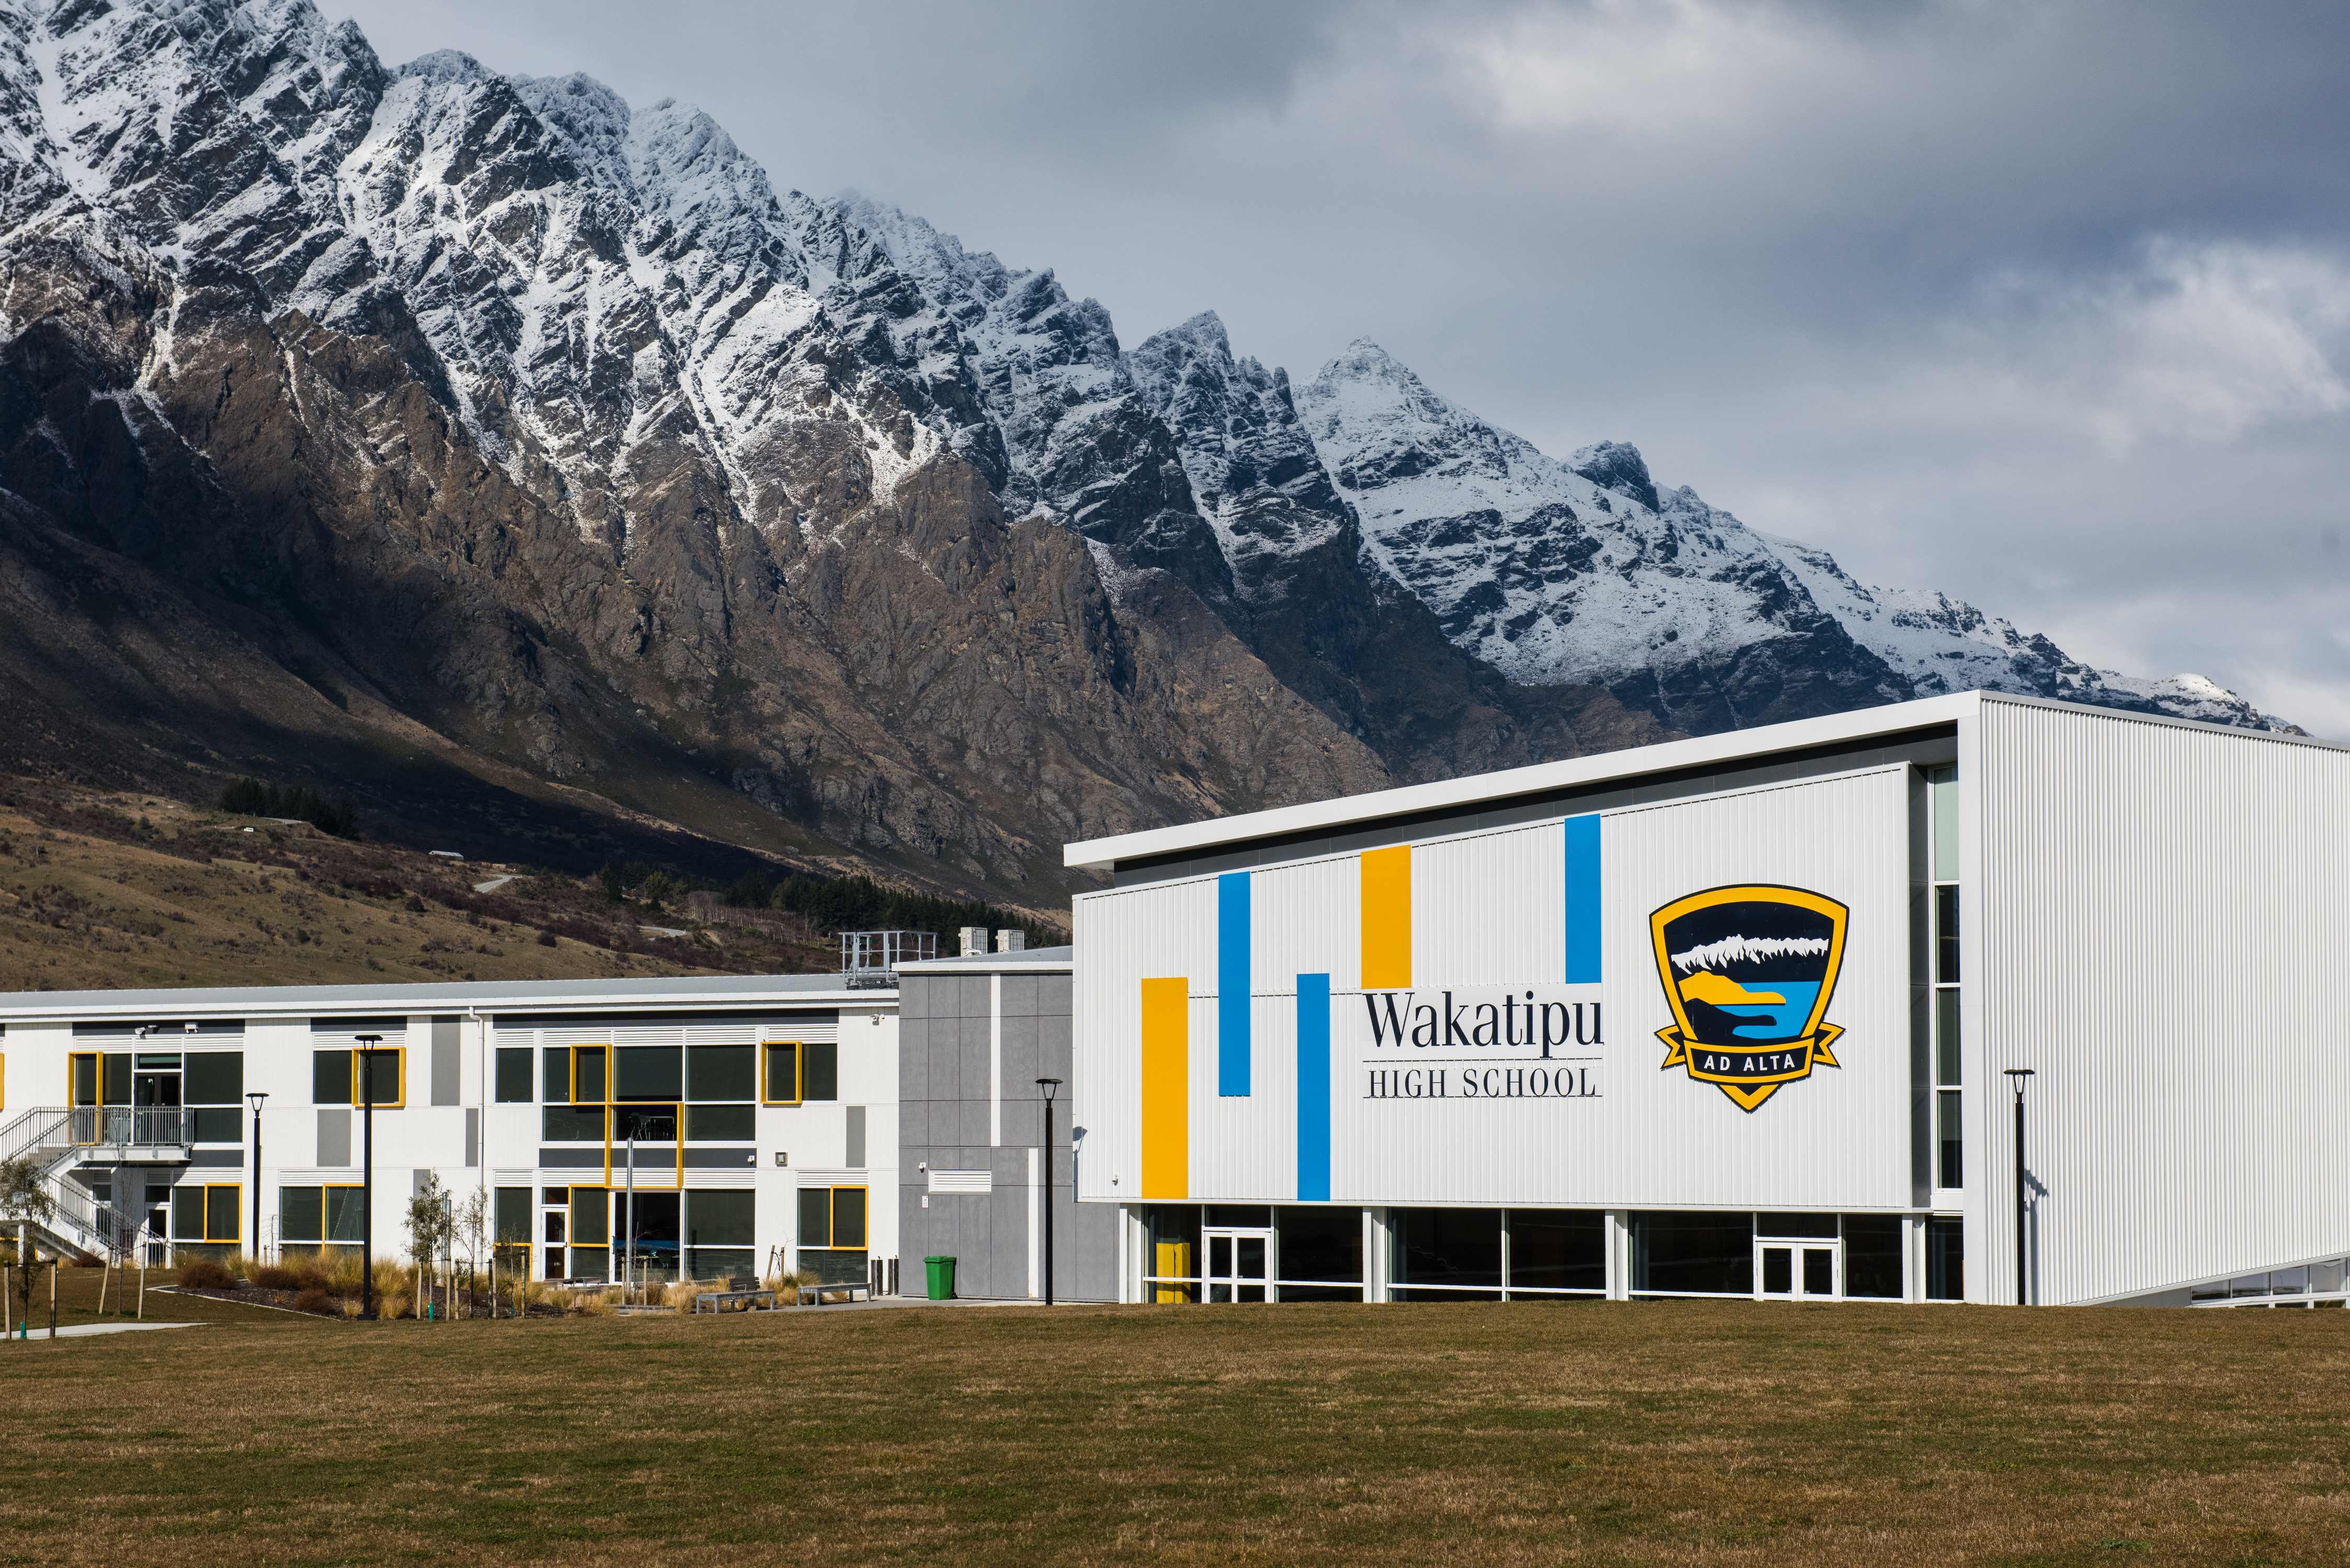 Wakatipu High School